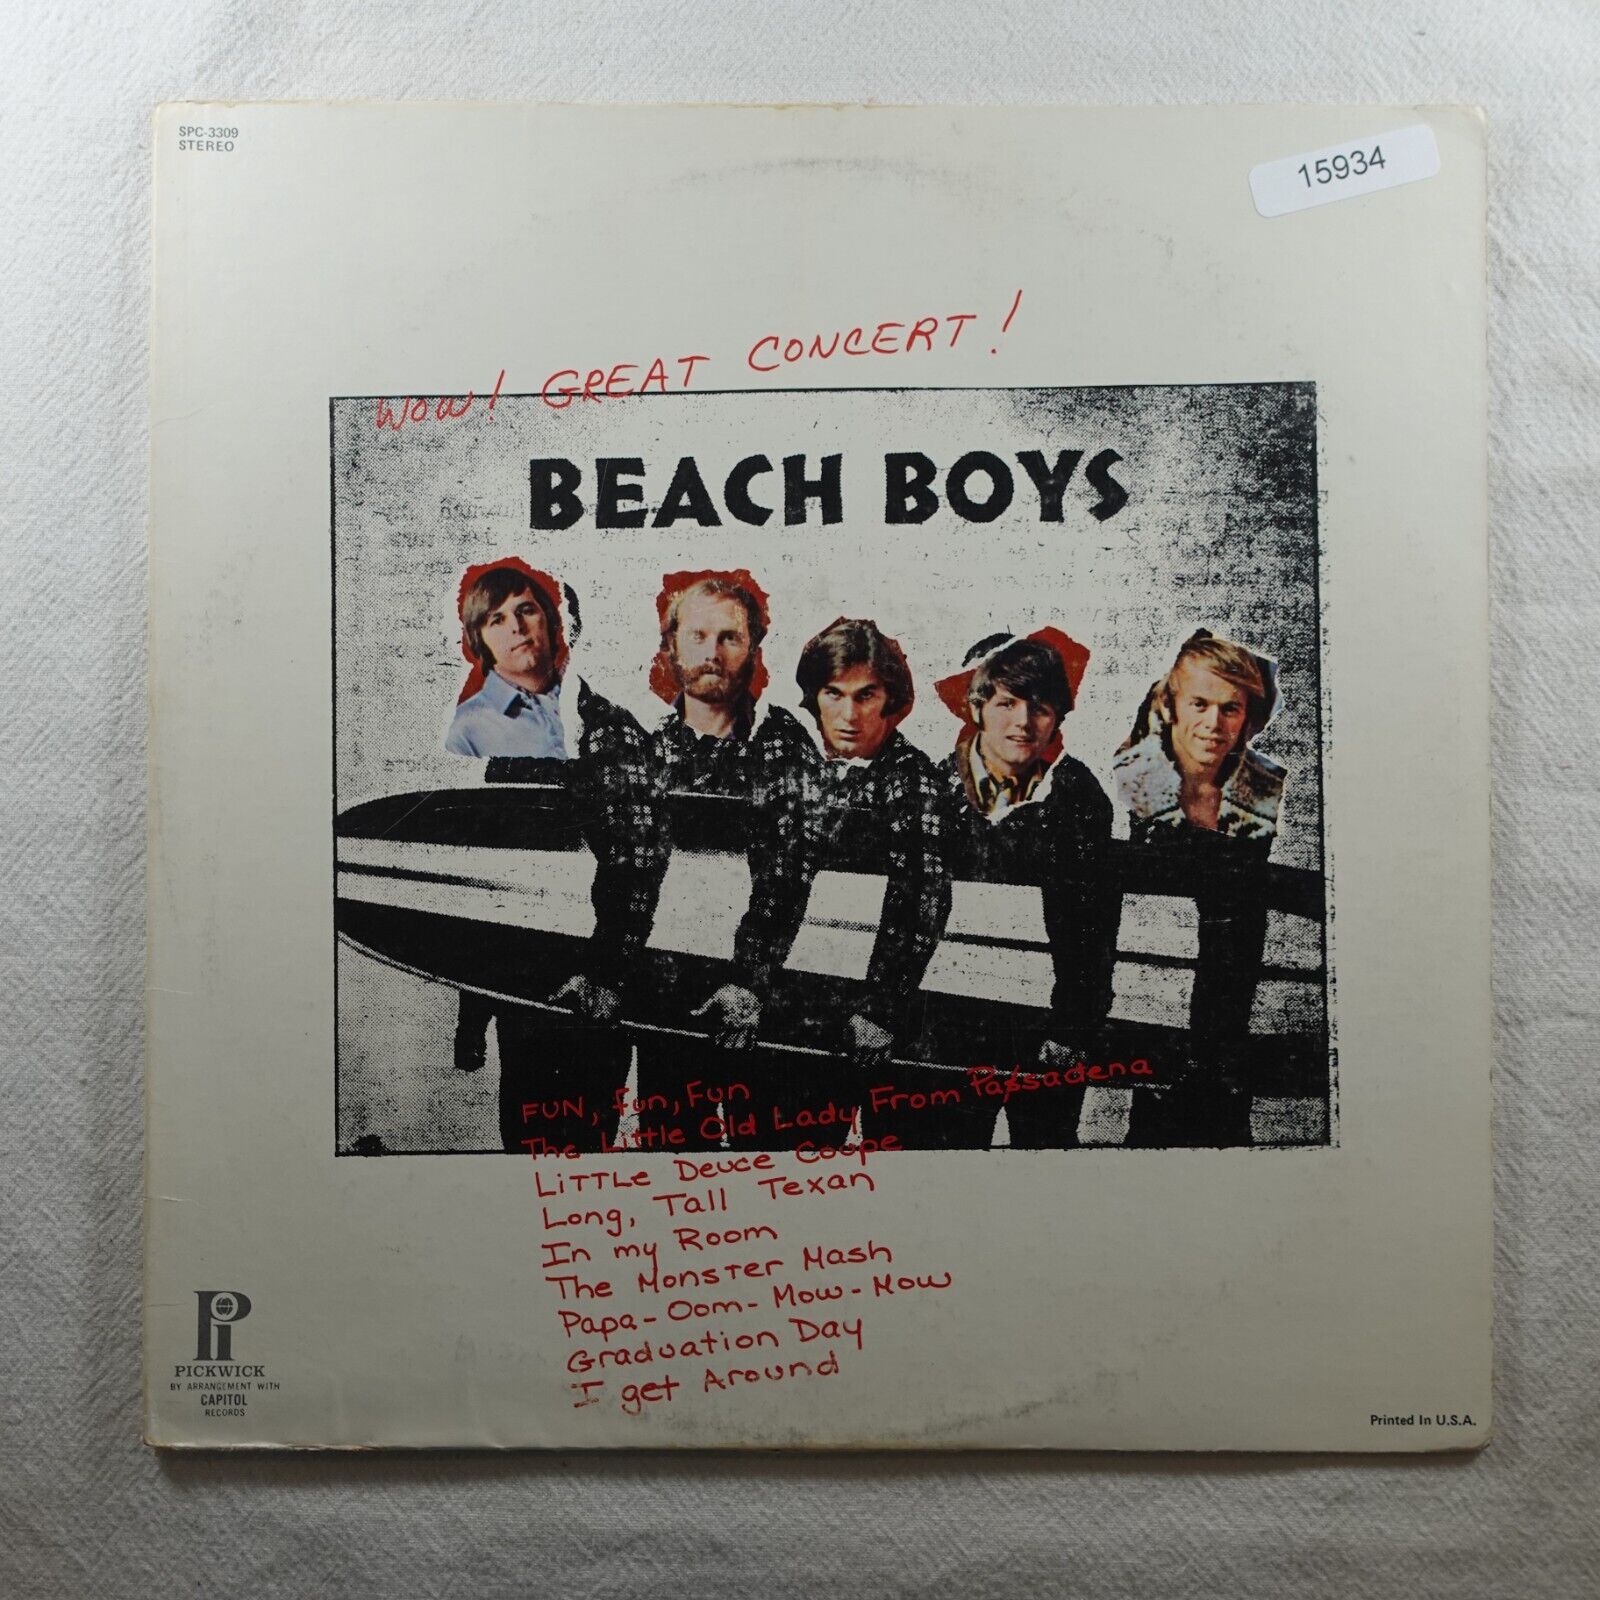 The Beach Boys Wow Great Concert   Record Album Vinyl LP